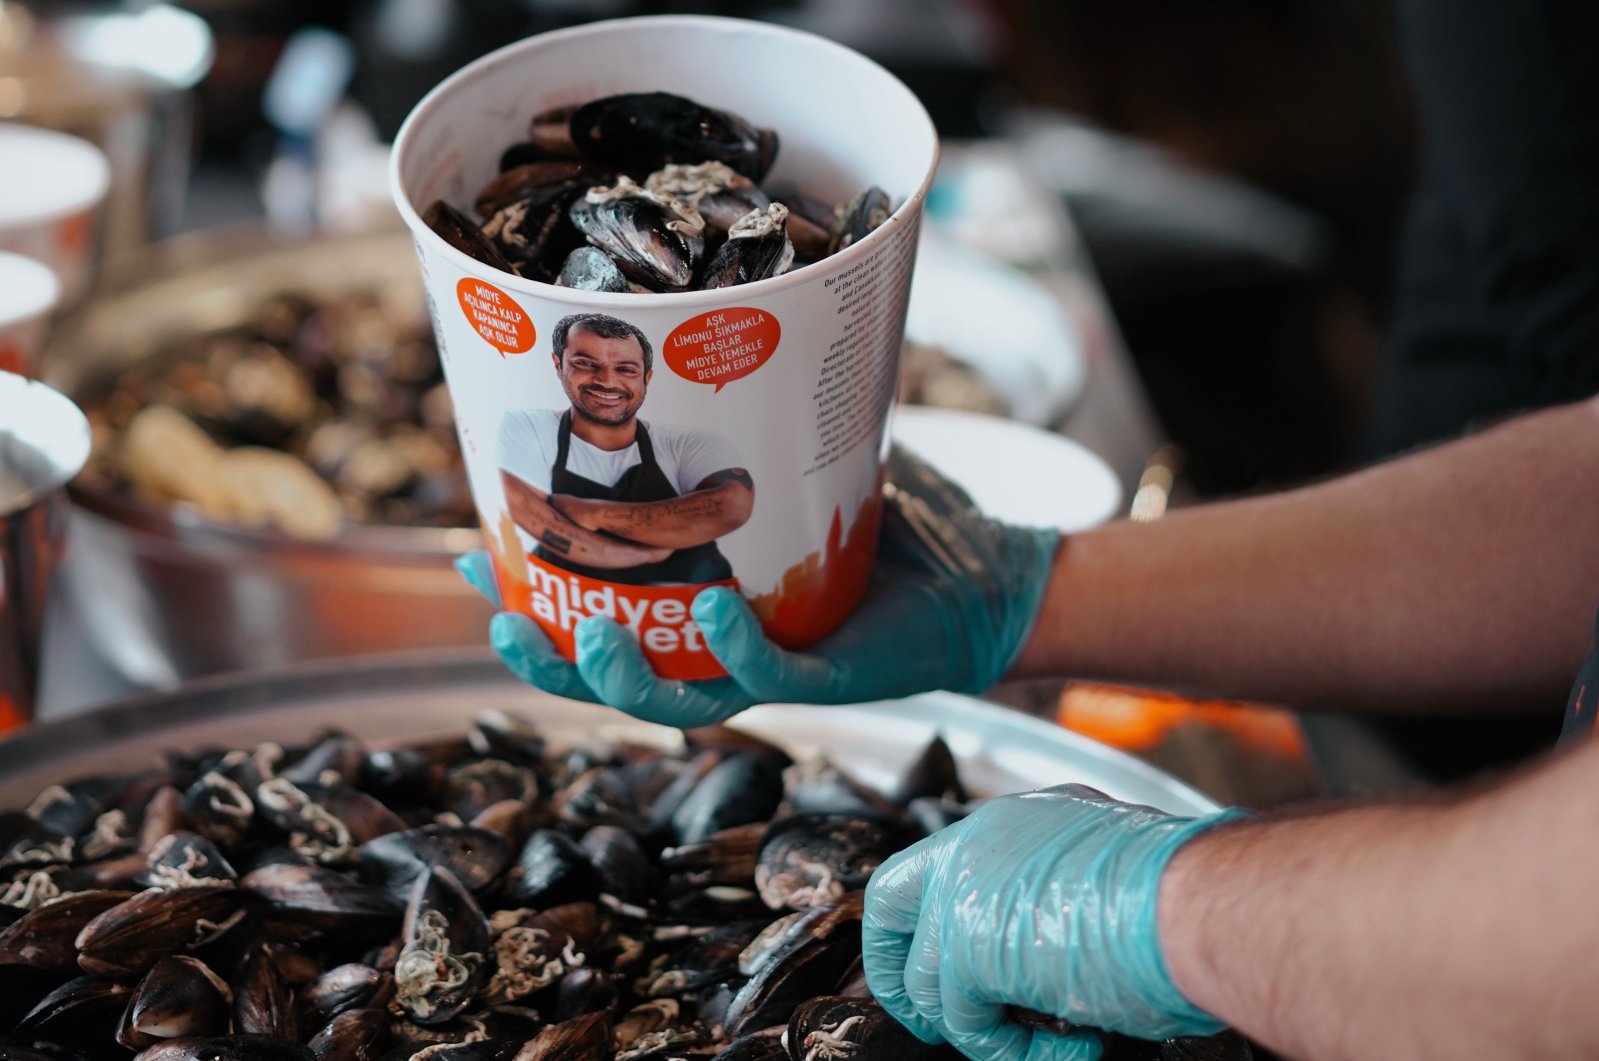 ‘Lord of Mussels’ Turki terjun ke pasar UEA